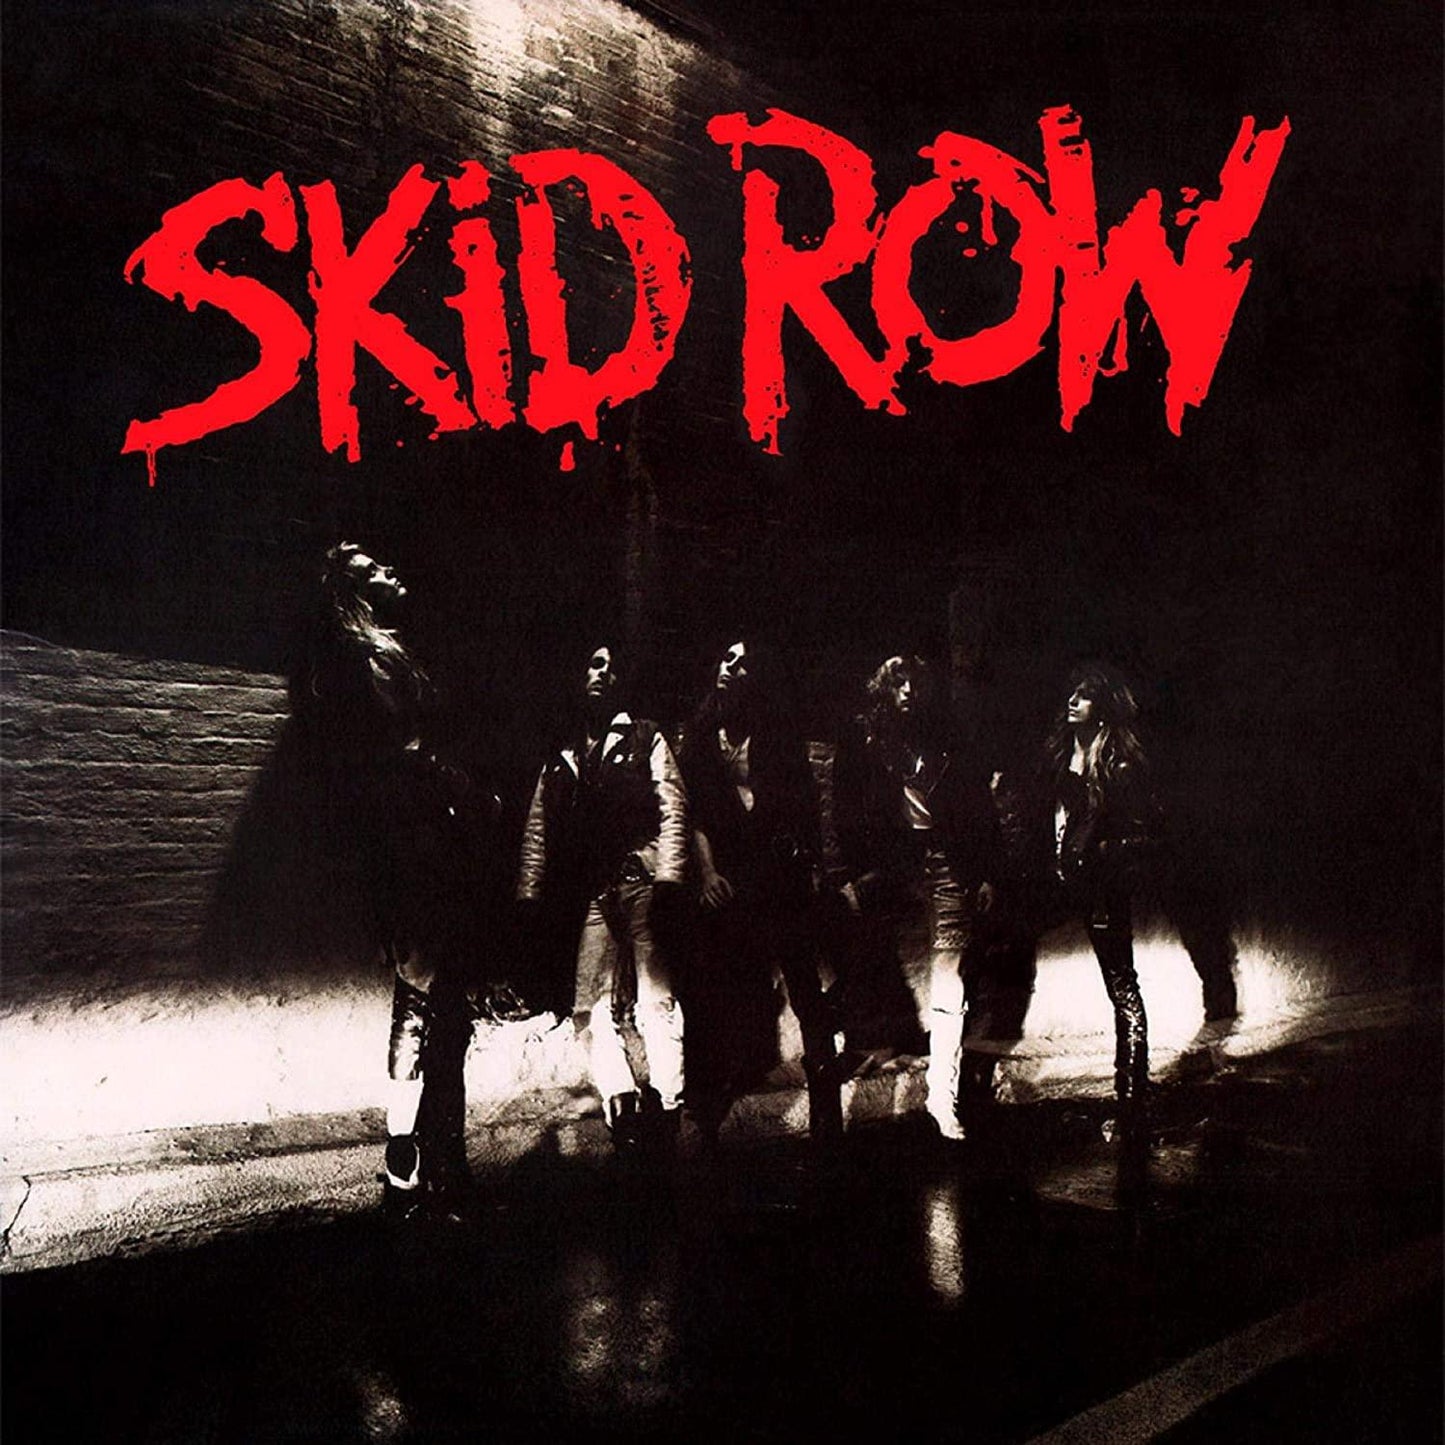 Skid Row - Skid Row (Limited Anniversary Edition, 180 Gram, Metallic Gold Color) (LP) - Joco Records